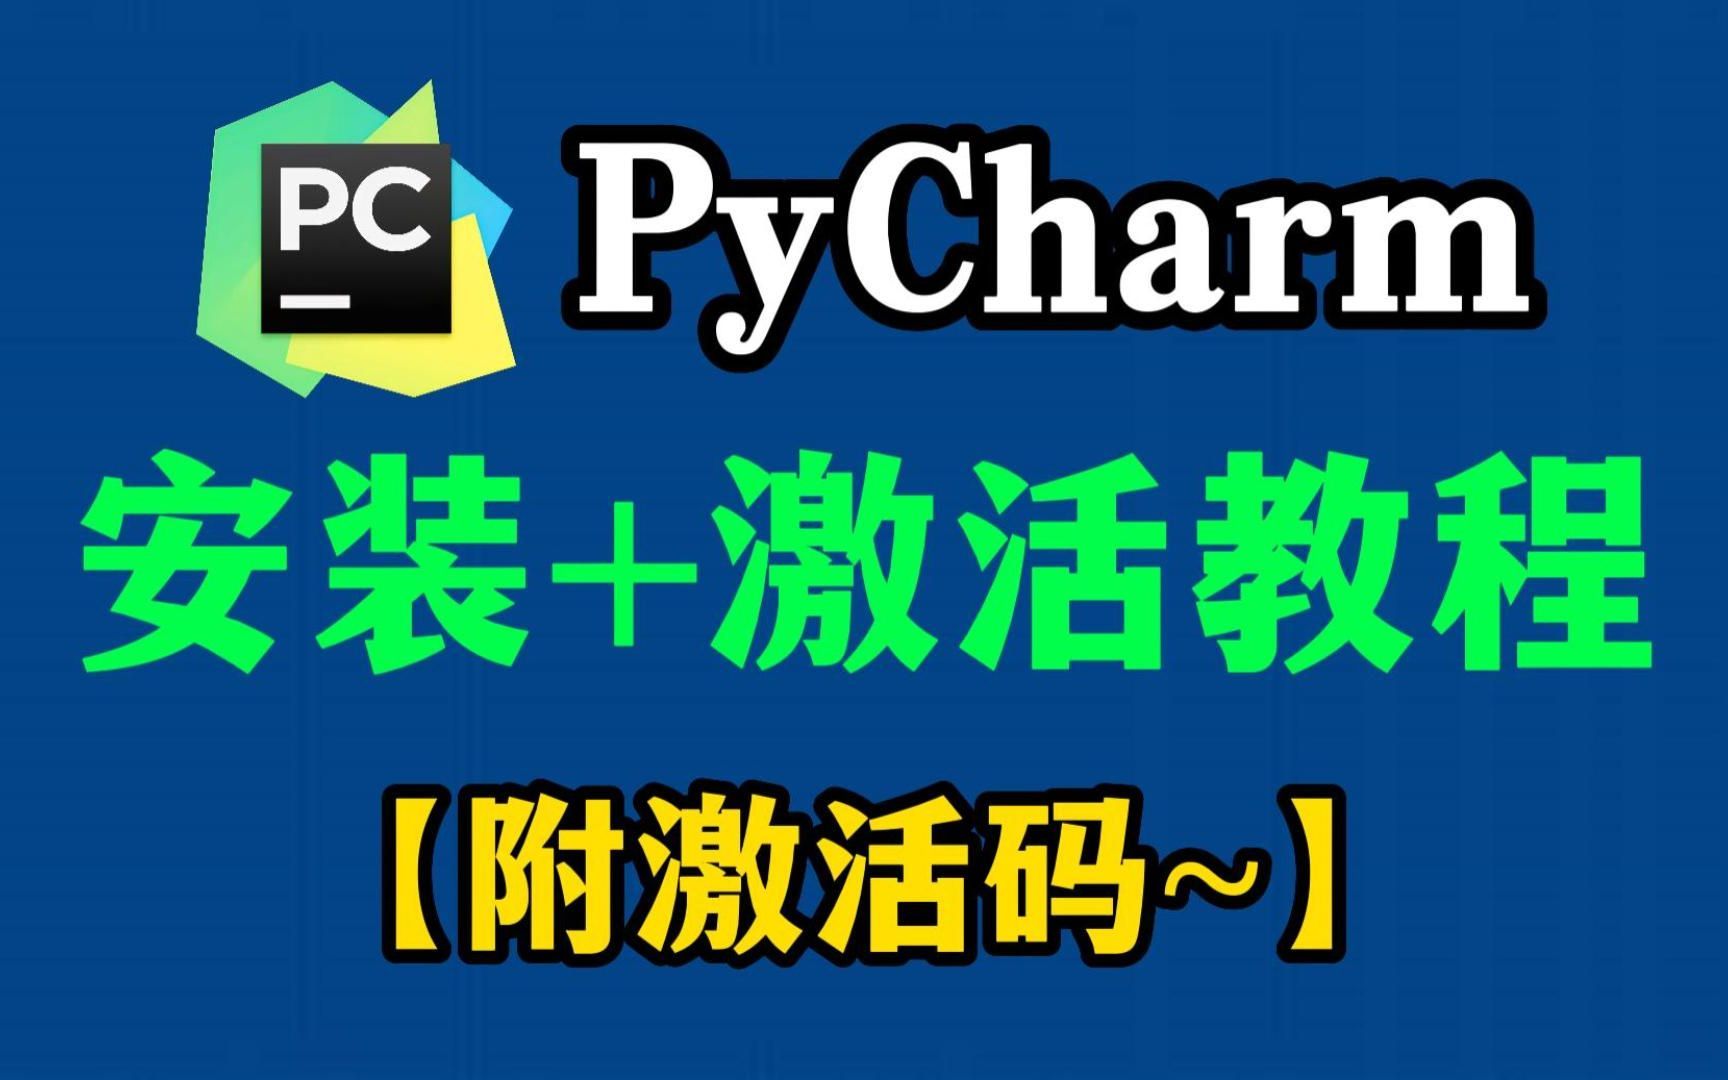 【Pycharm安装＋激活】pycharm专业版下载教程，零基础详细教程，一看就会！（附激活码~）